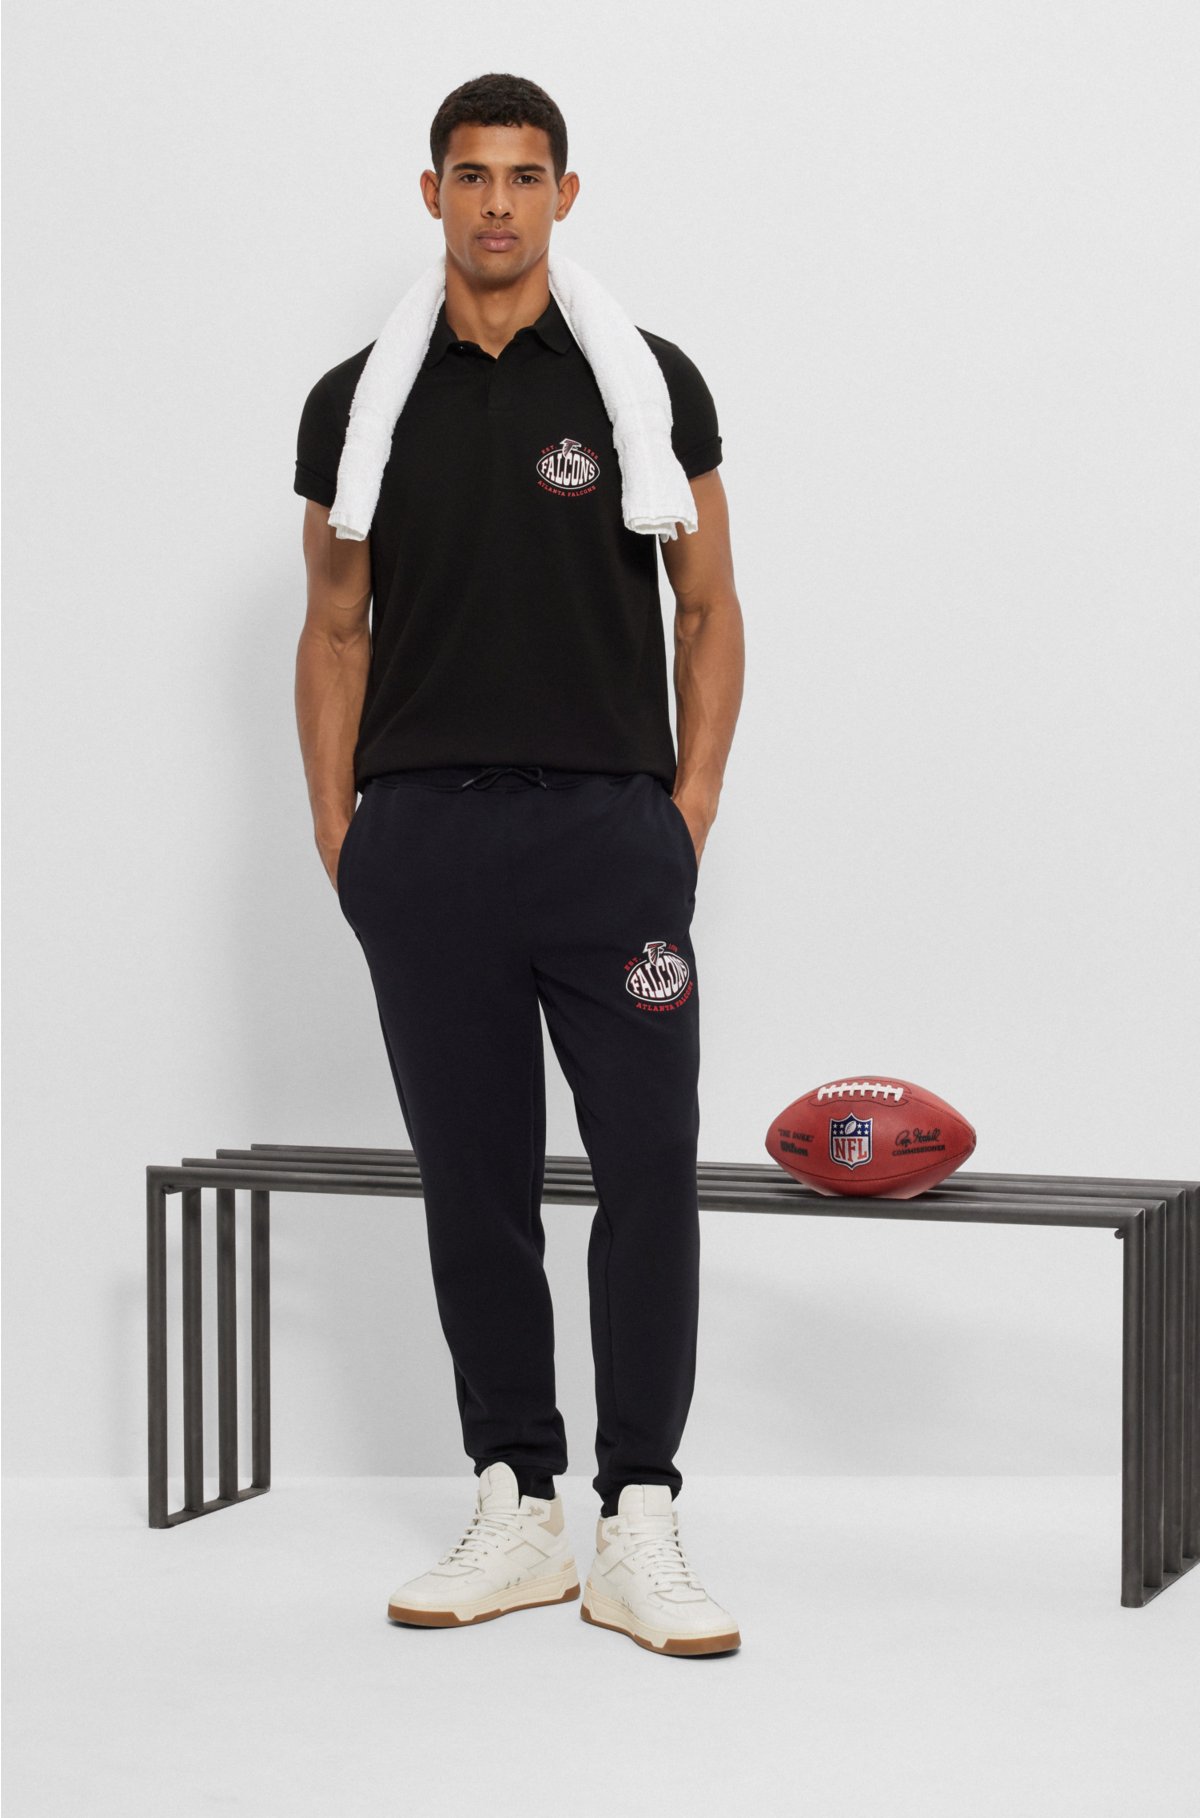 BOSS x NFL cotton-piqué polo shirt with collaborative branding, Falcons